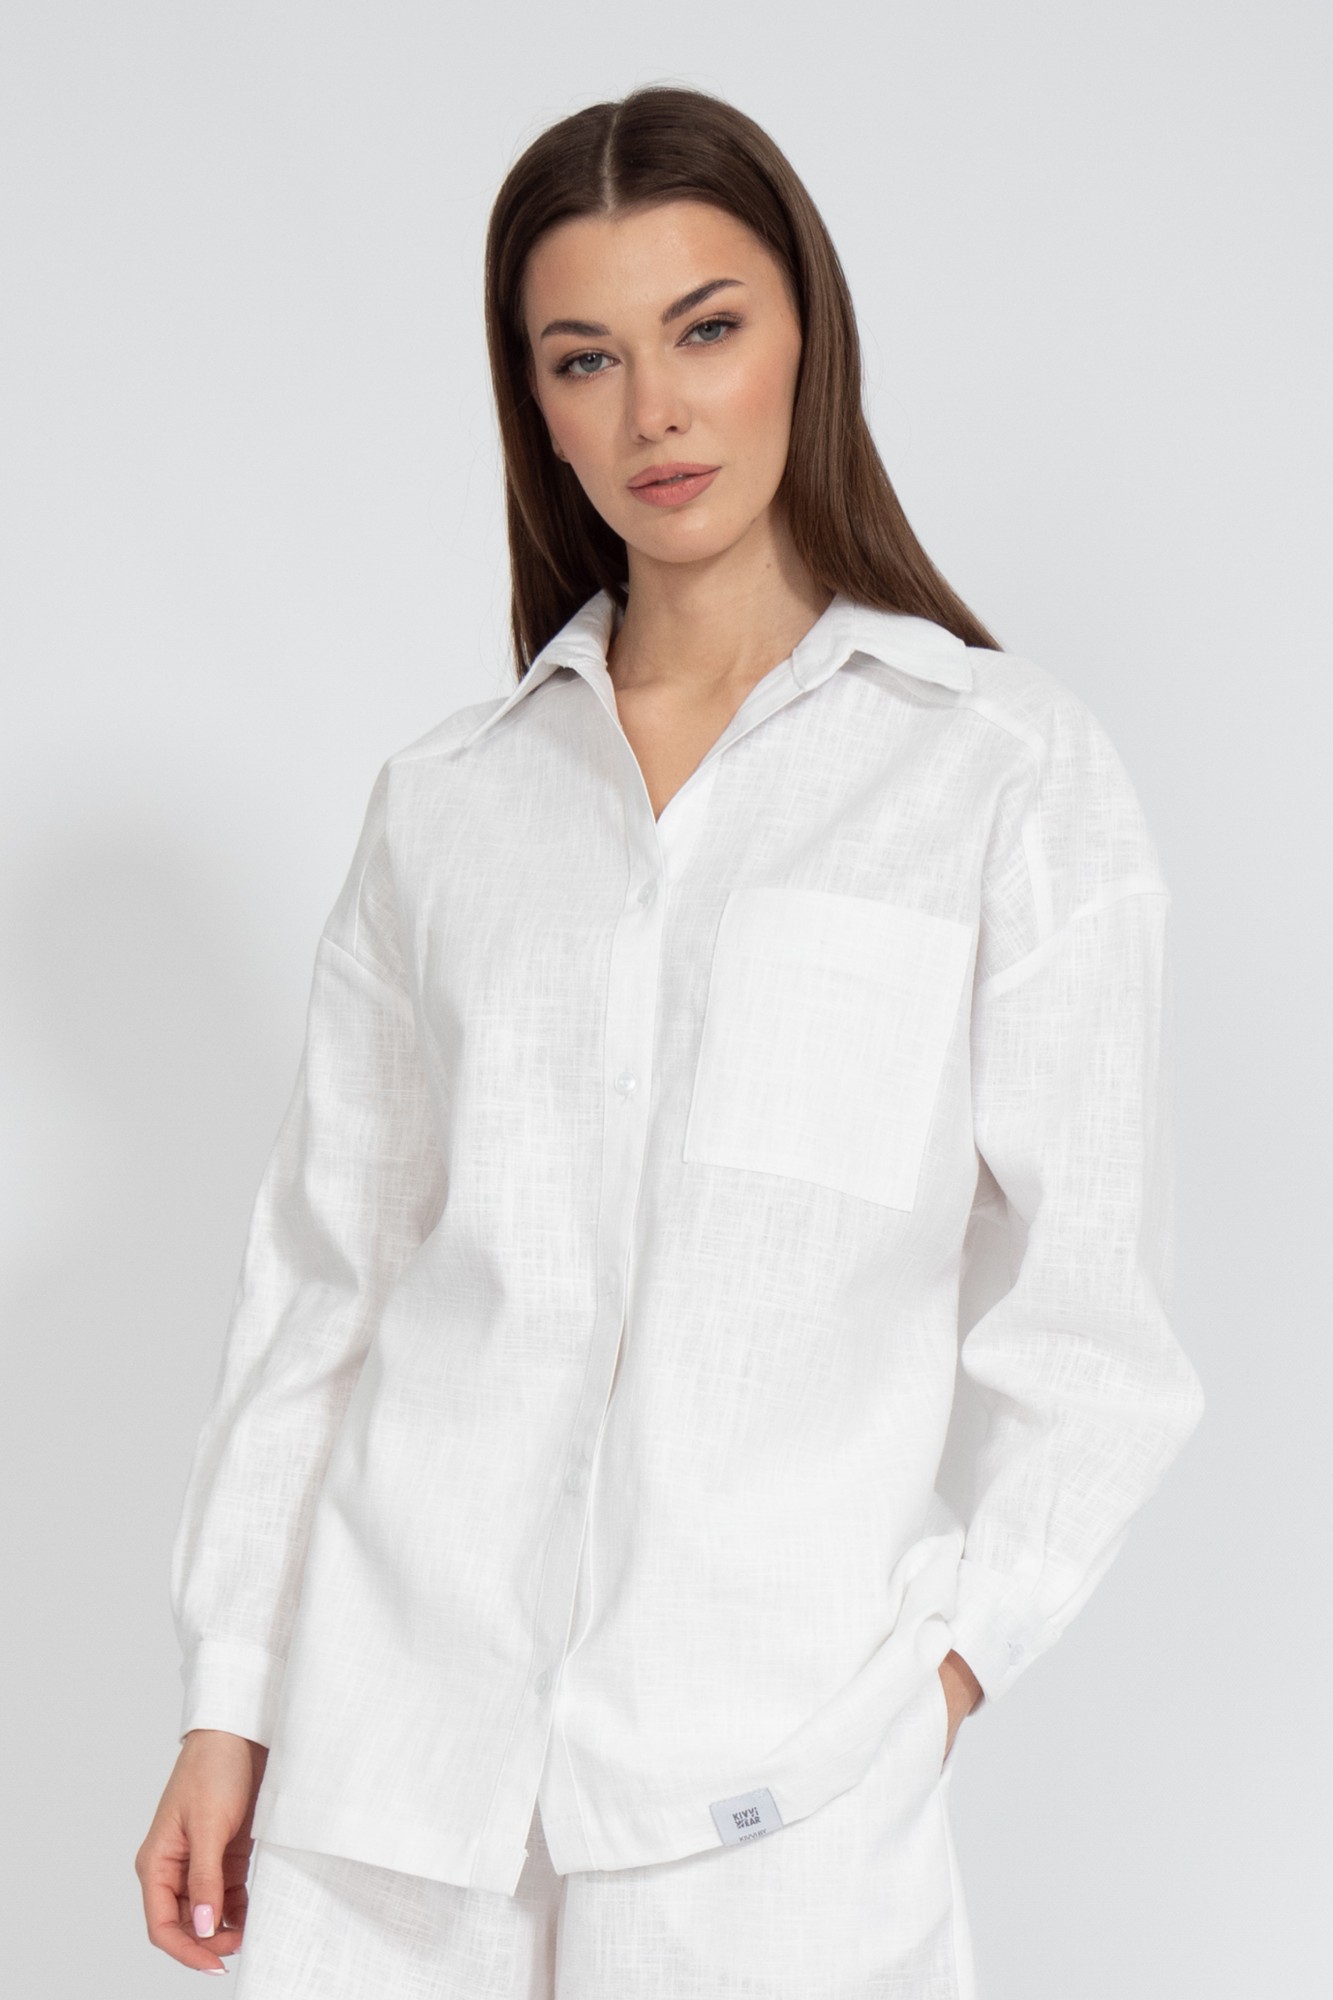 Белая рубашка как базовый элемент гардероба